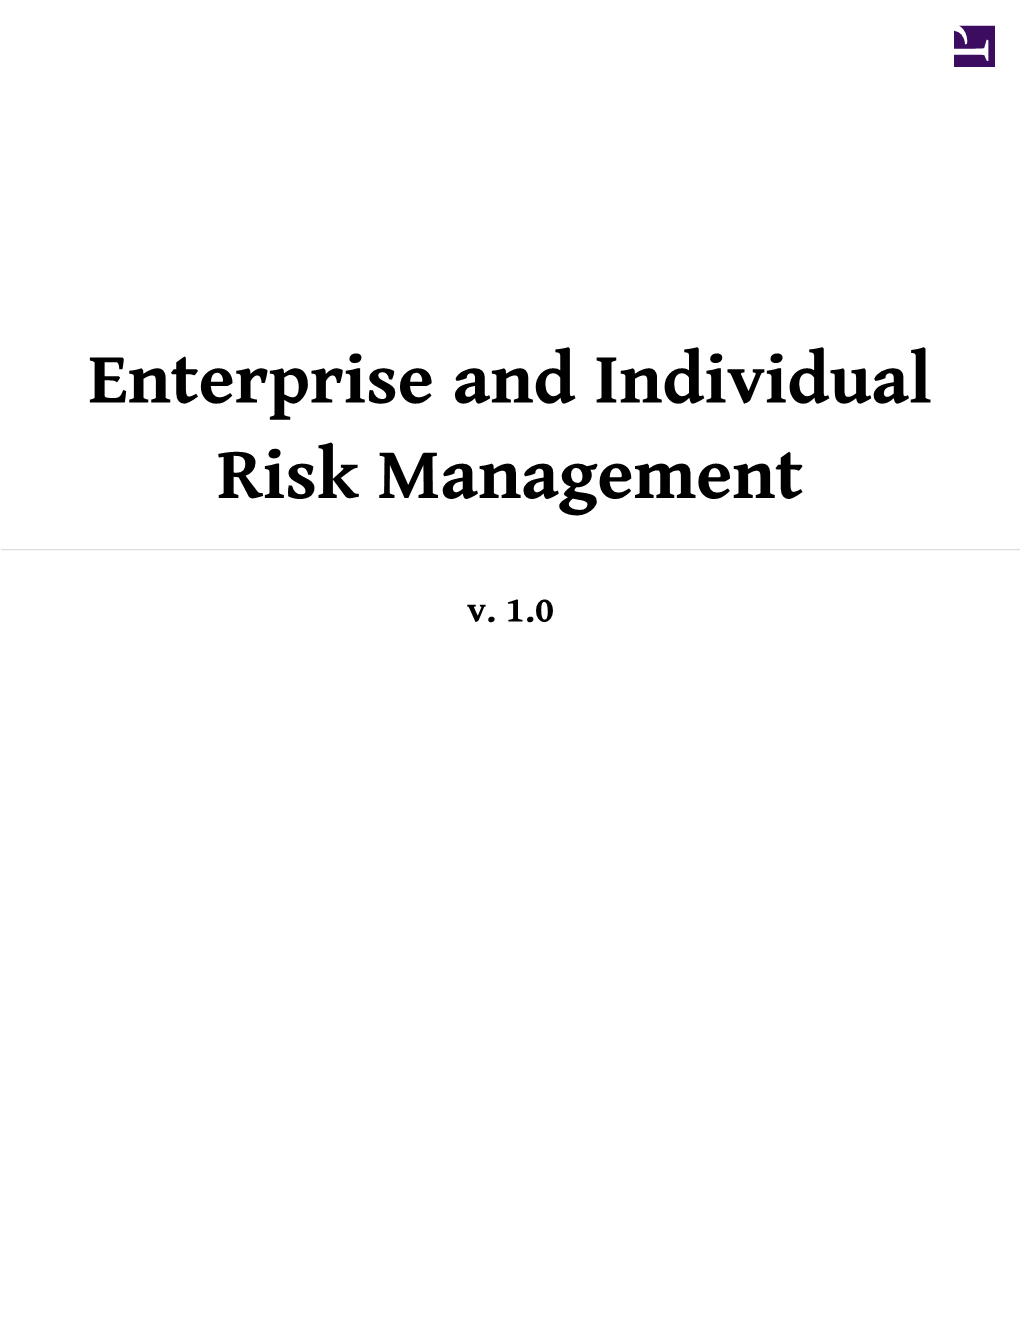 Enterprise and Individual Risk Management